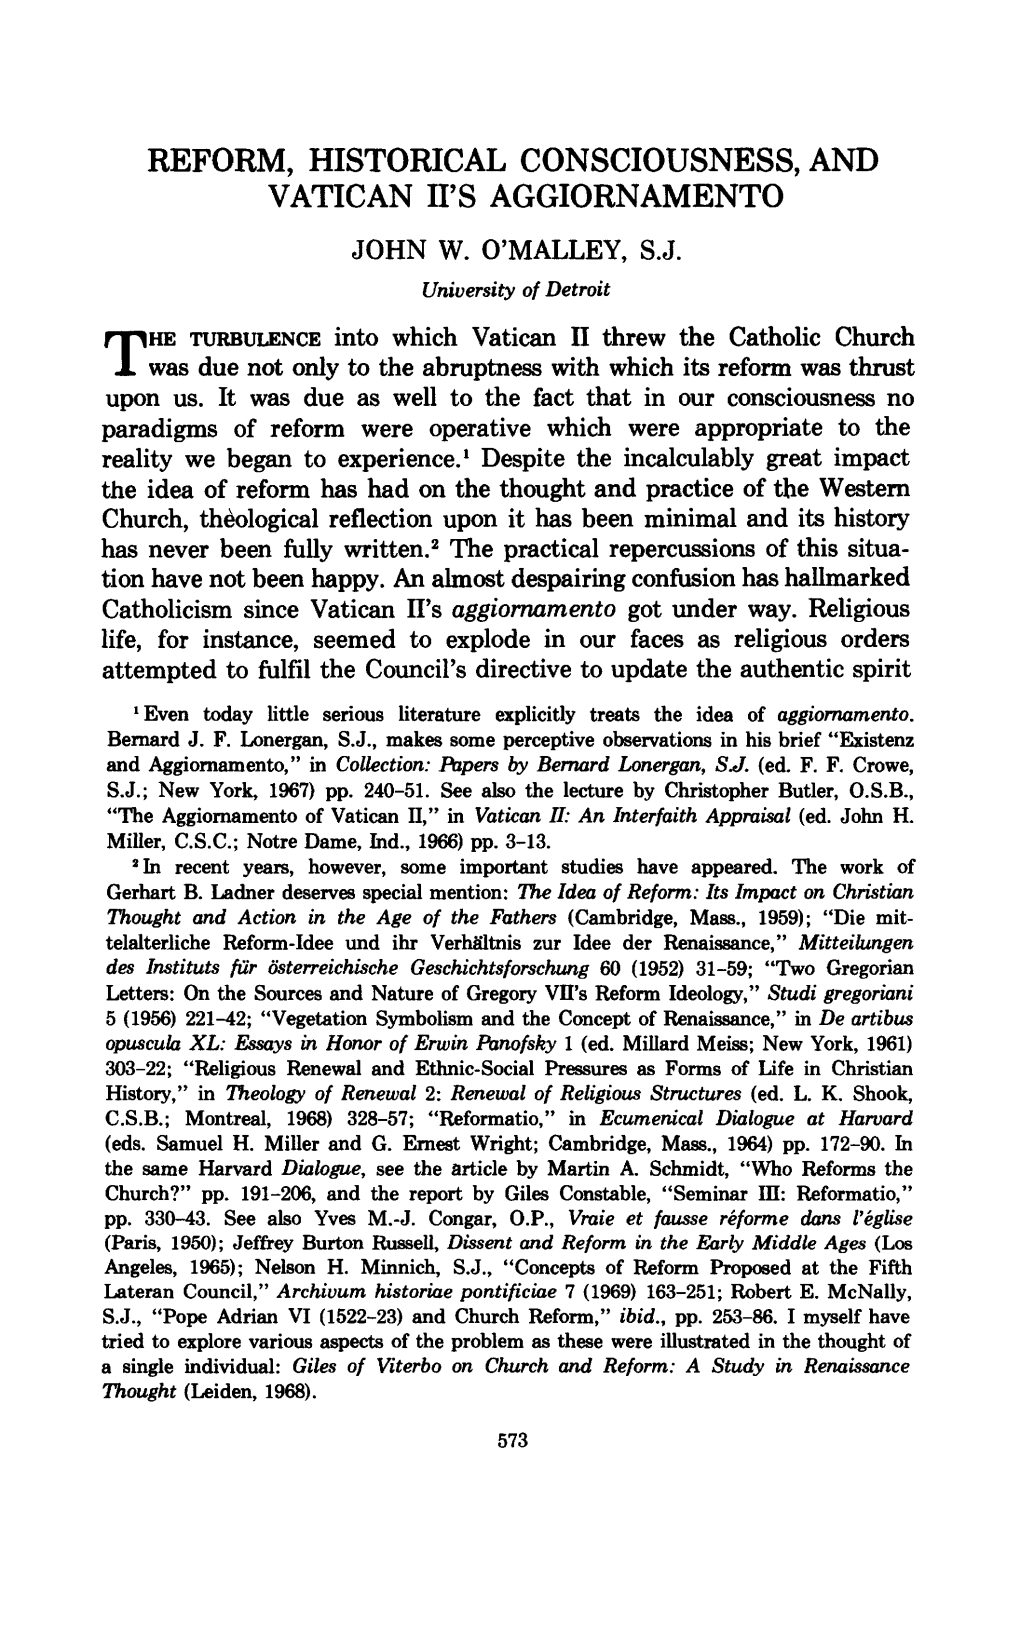 Reform, Historical Consciousness, and Vatican Ips Aggiornamento John W